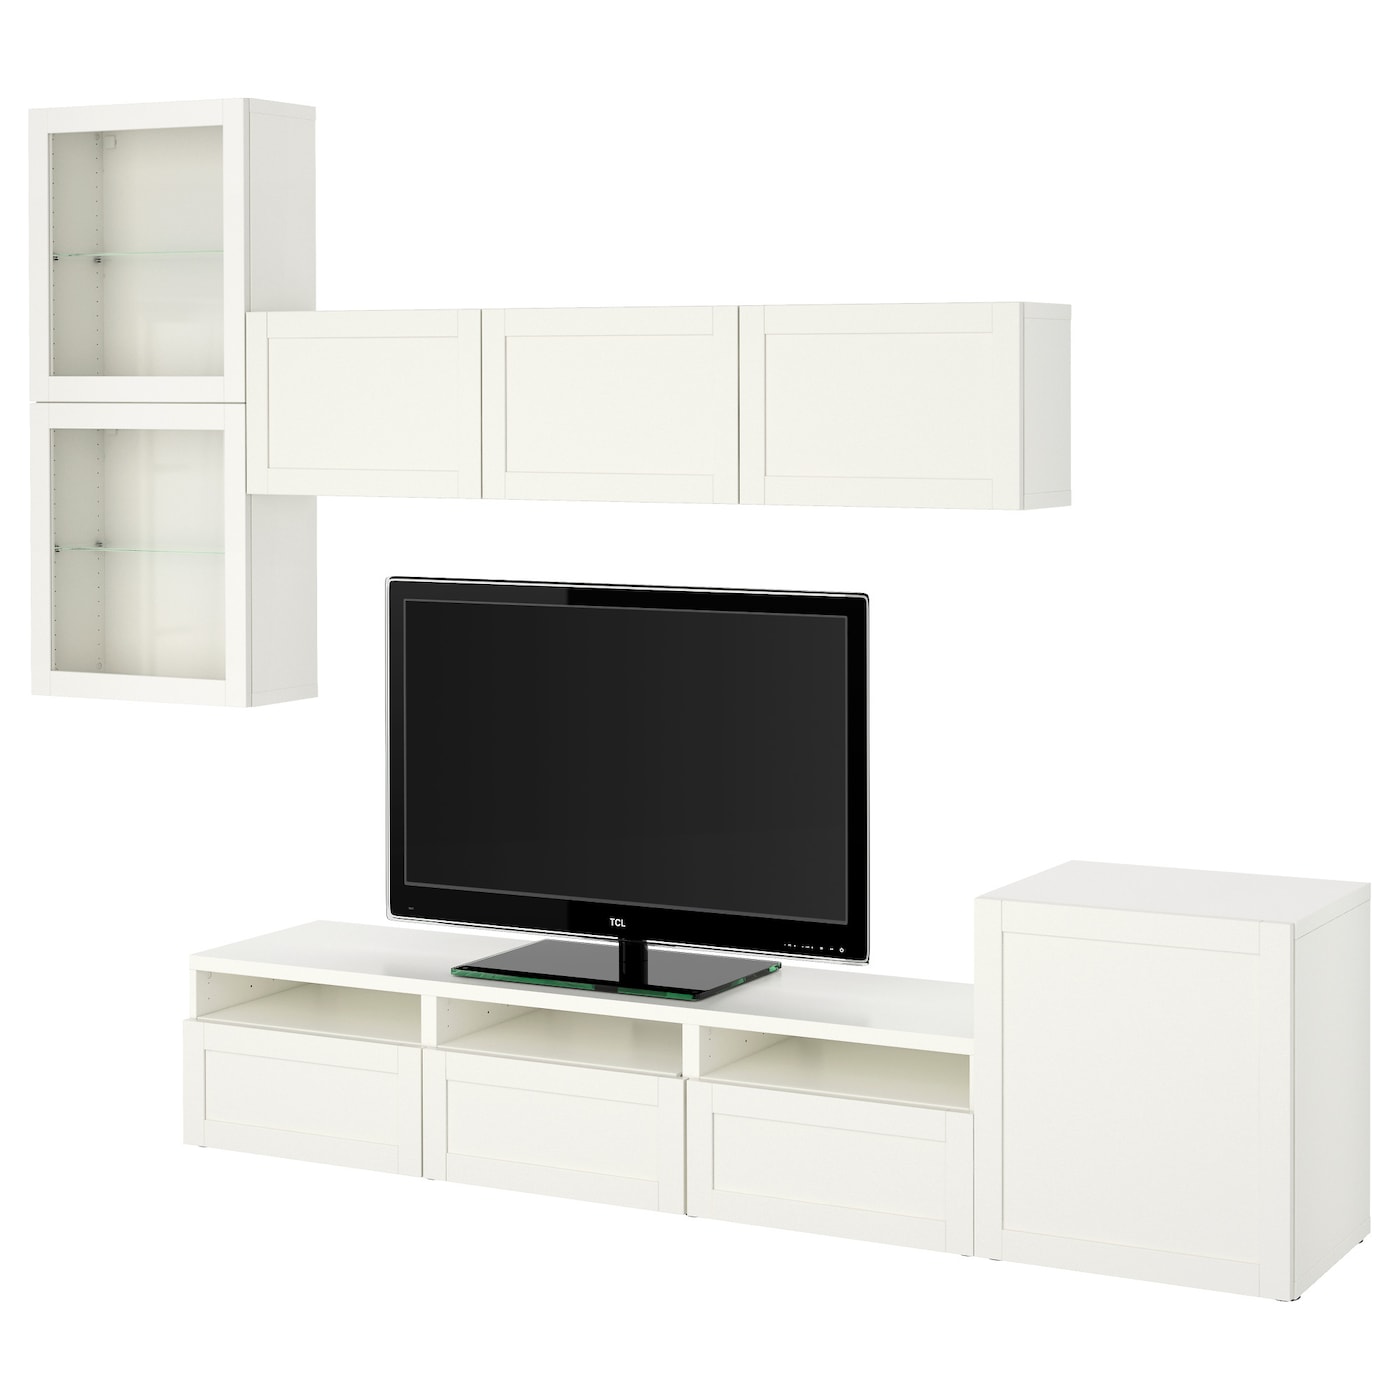 Комбинация для хранения ТВ - IKEA BESTÅ/BESTA, 211x42x300см, белый, БЕСТО ИКЕА